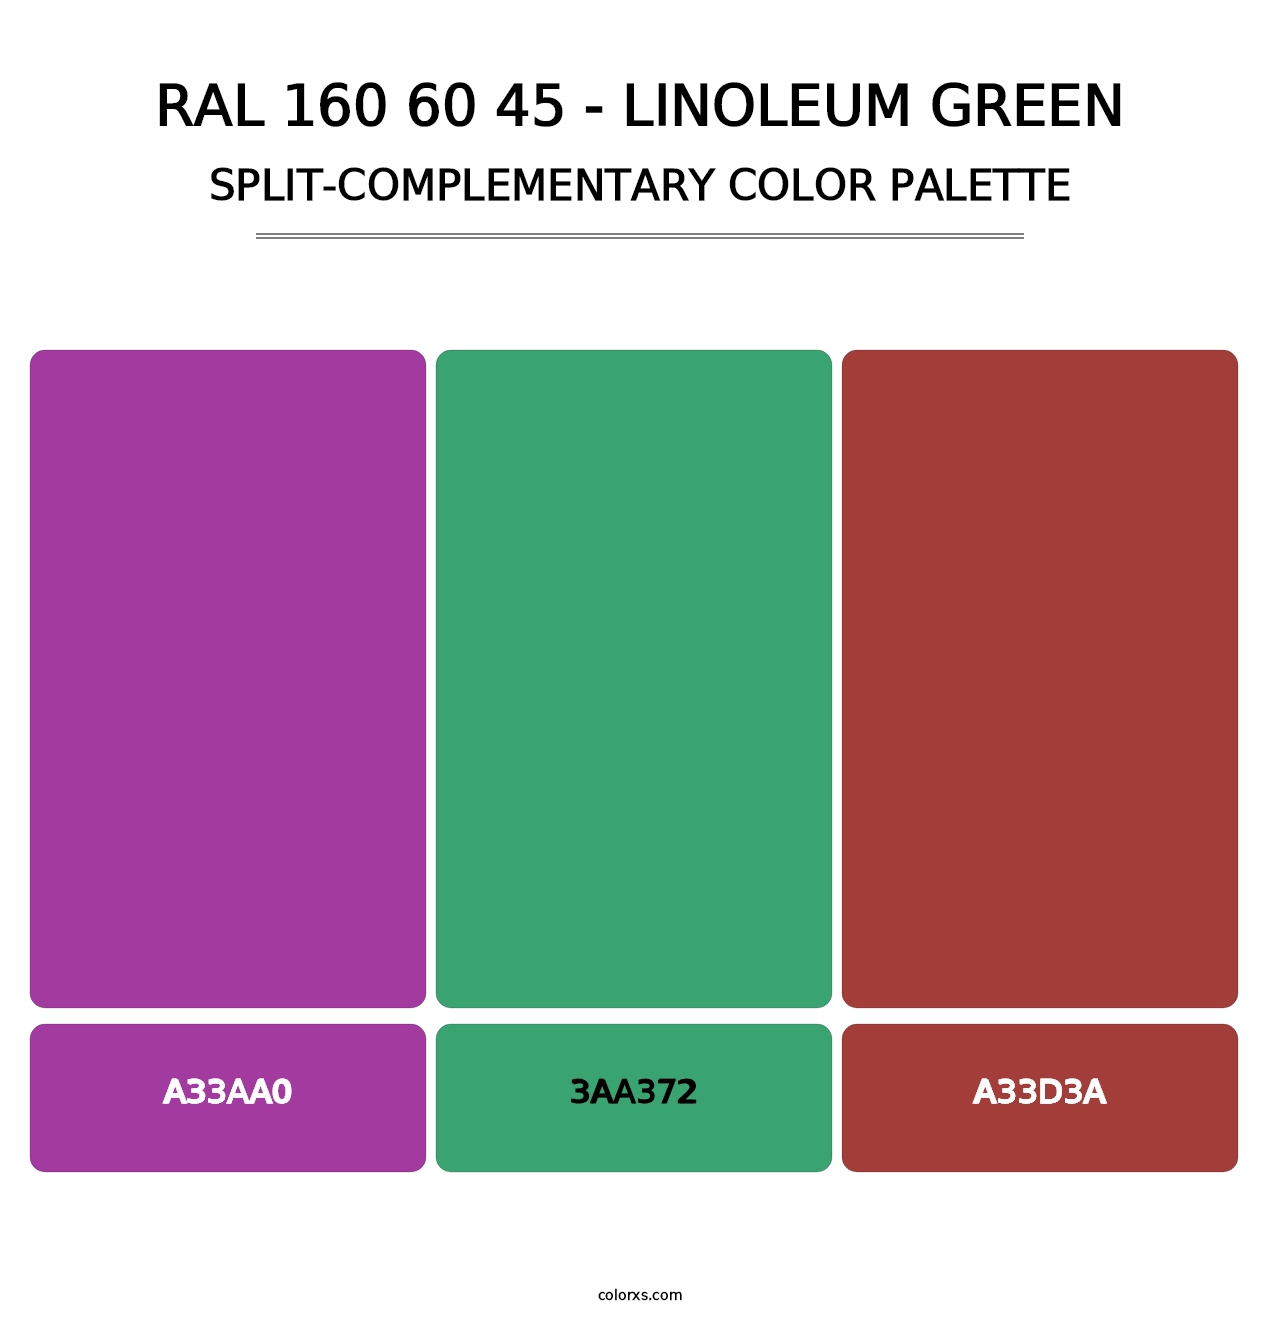 RAL 160 60 45 - Linoleum Green - Split-Complementary Color Palette